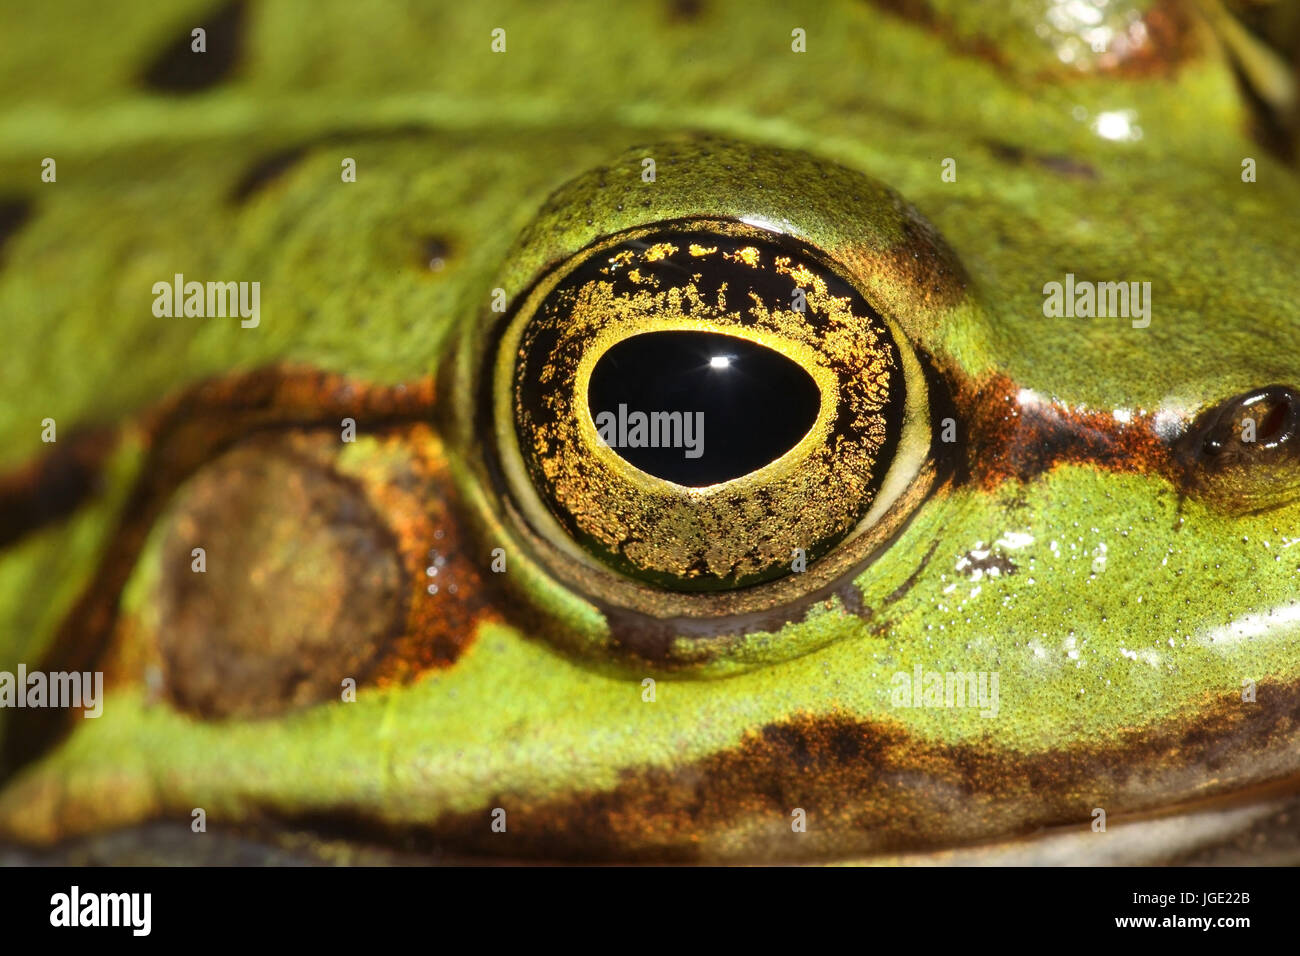 Teich Frosch Auge, Teichfrosch Auge Stockfotografie - Alamy